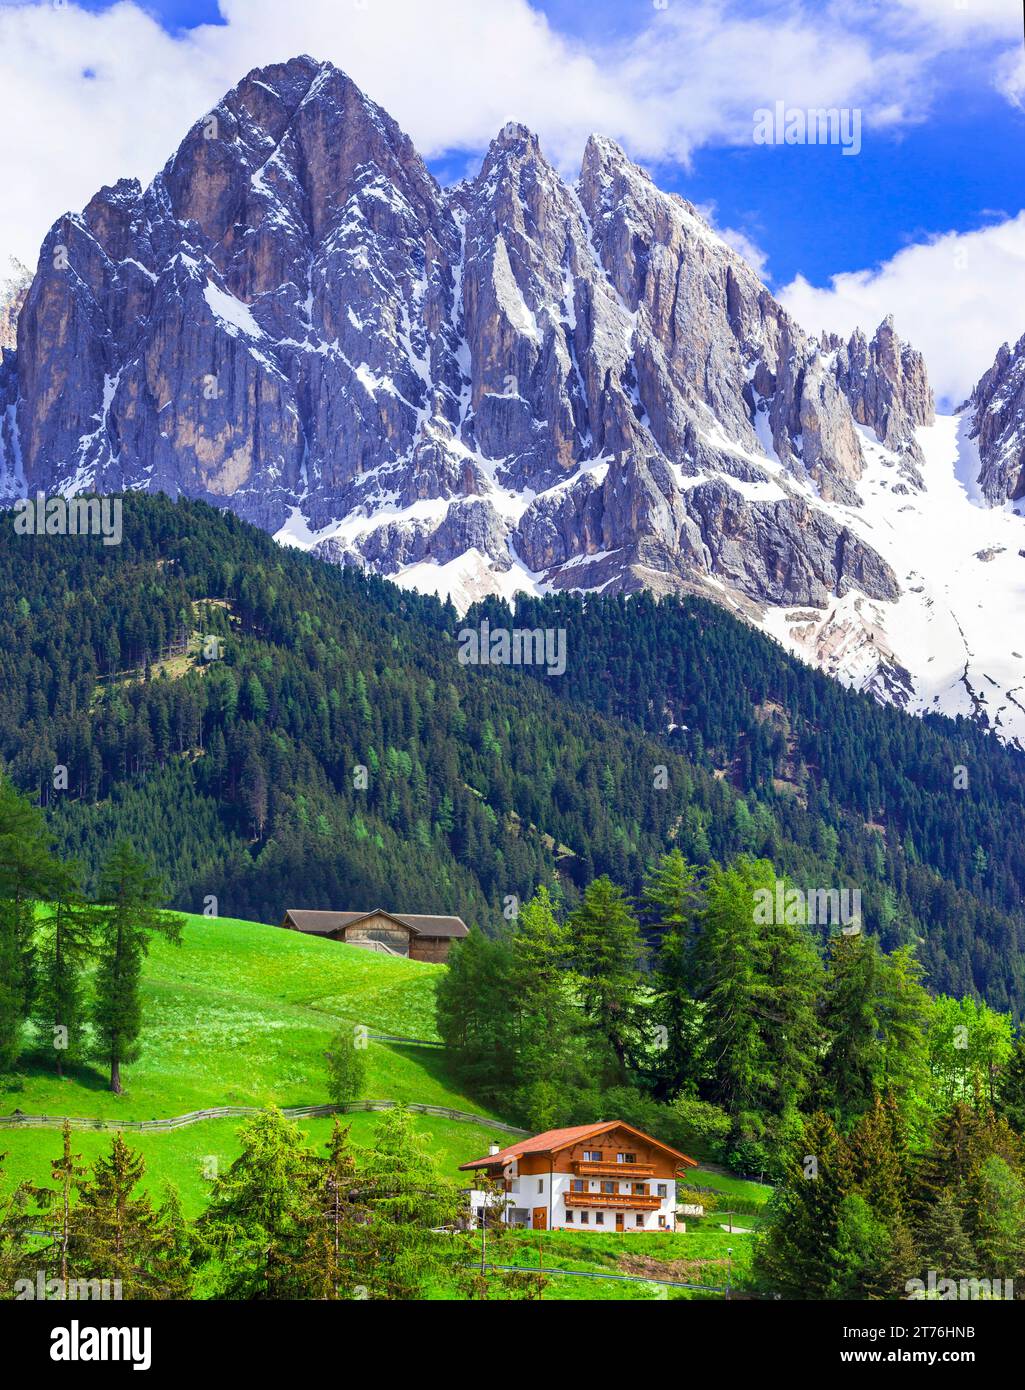 Stunning Alpine scenery of breathtaking Dolomites rocks mountains in Italian Alps, South Tyrol, Italy. famous and popular ski resort Stock Photo